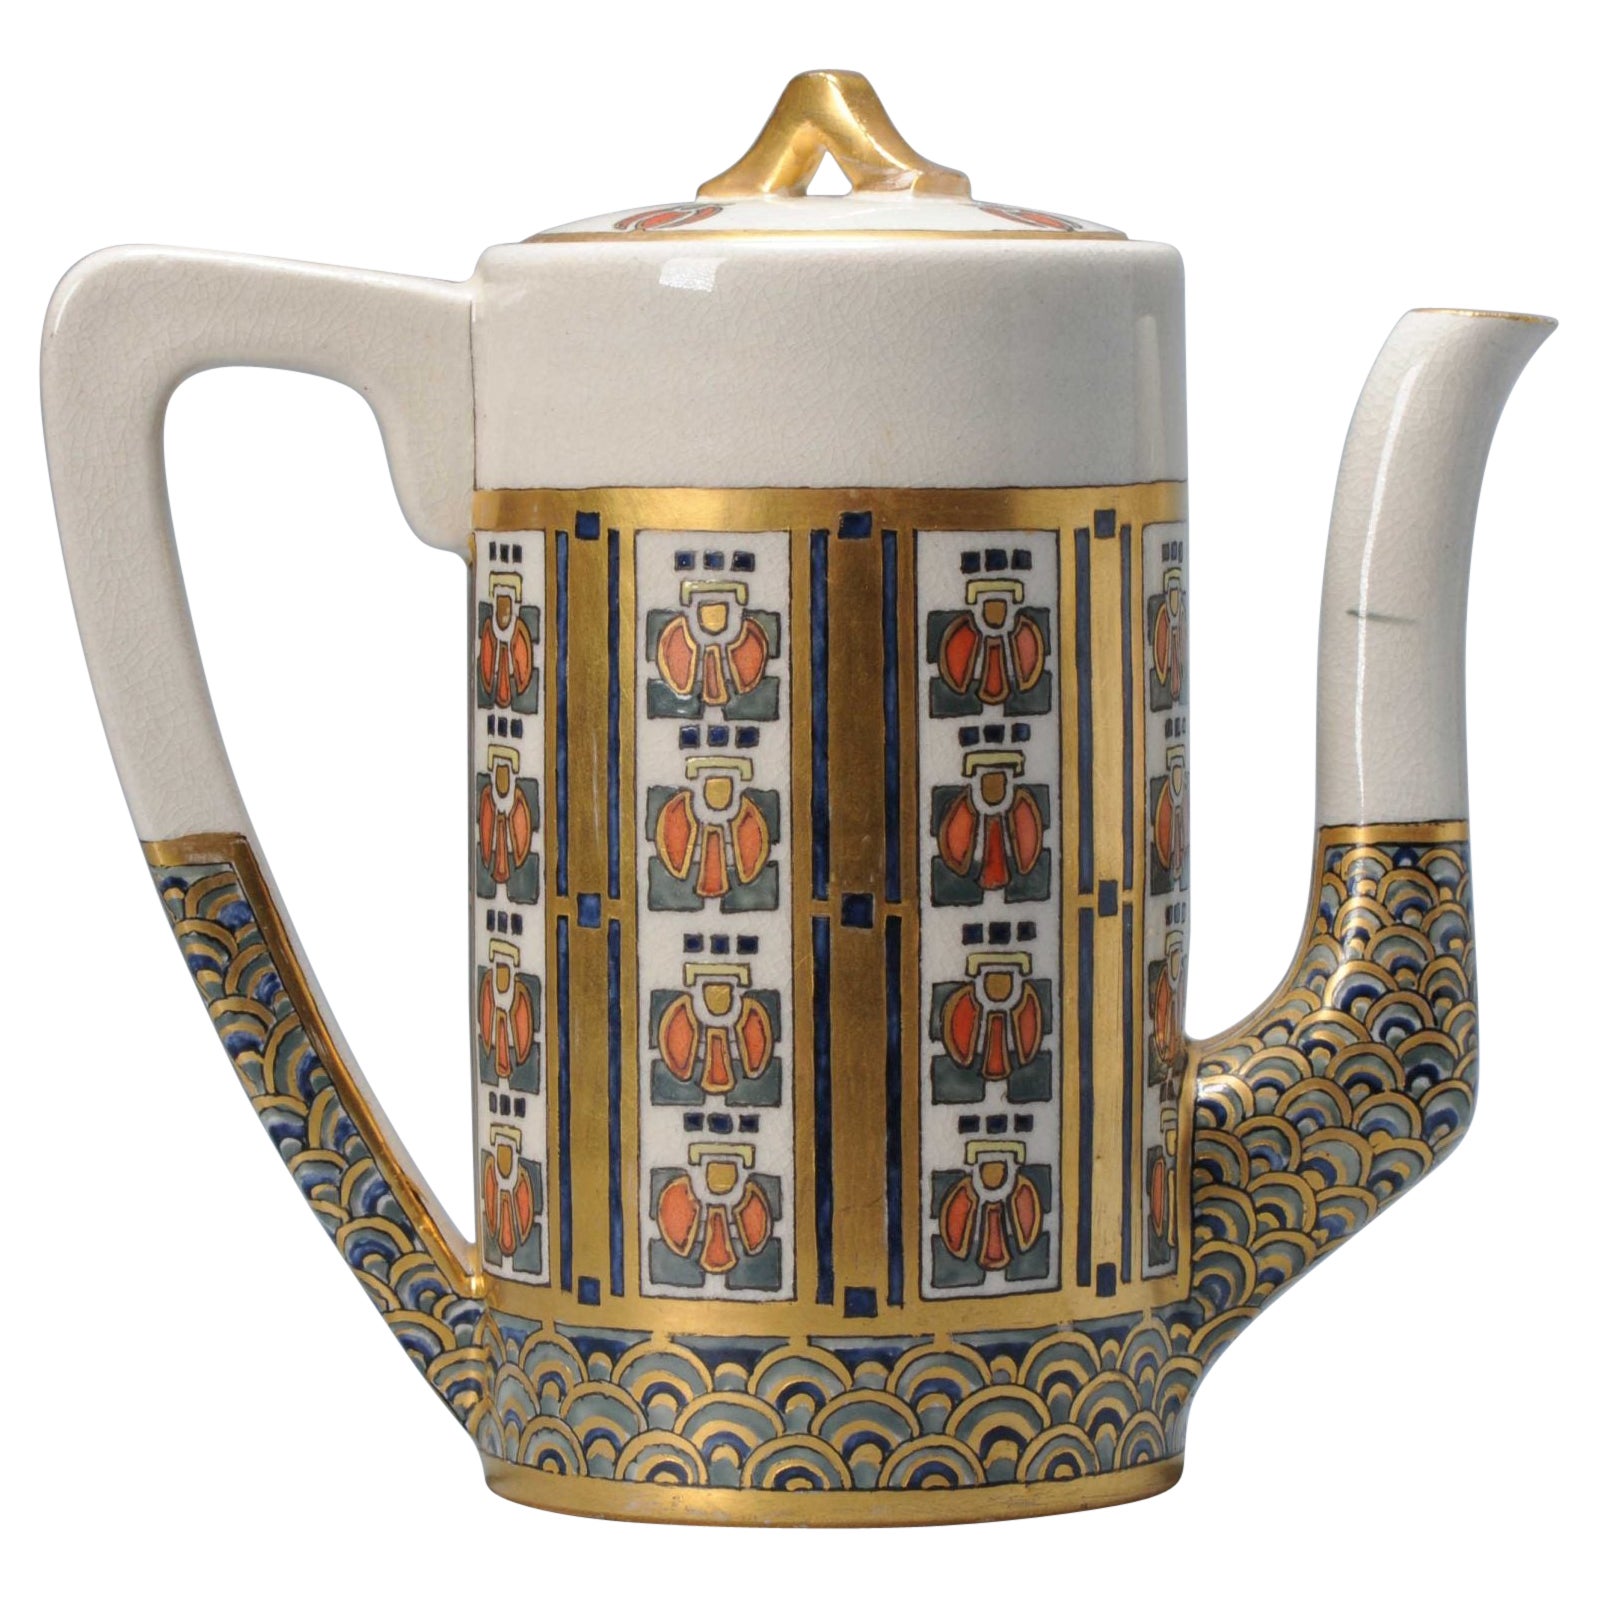 Antique Japanese Satsuma Tea Pot with Art Deco Influence Japan, 20th Century For Sale